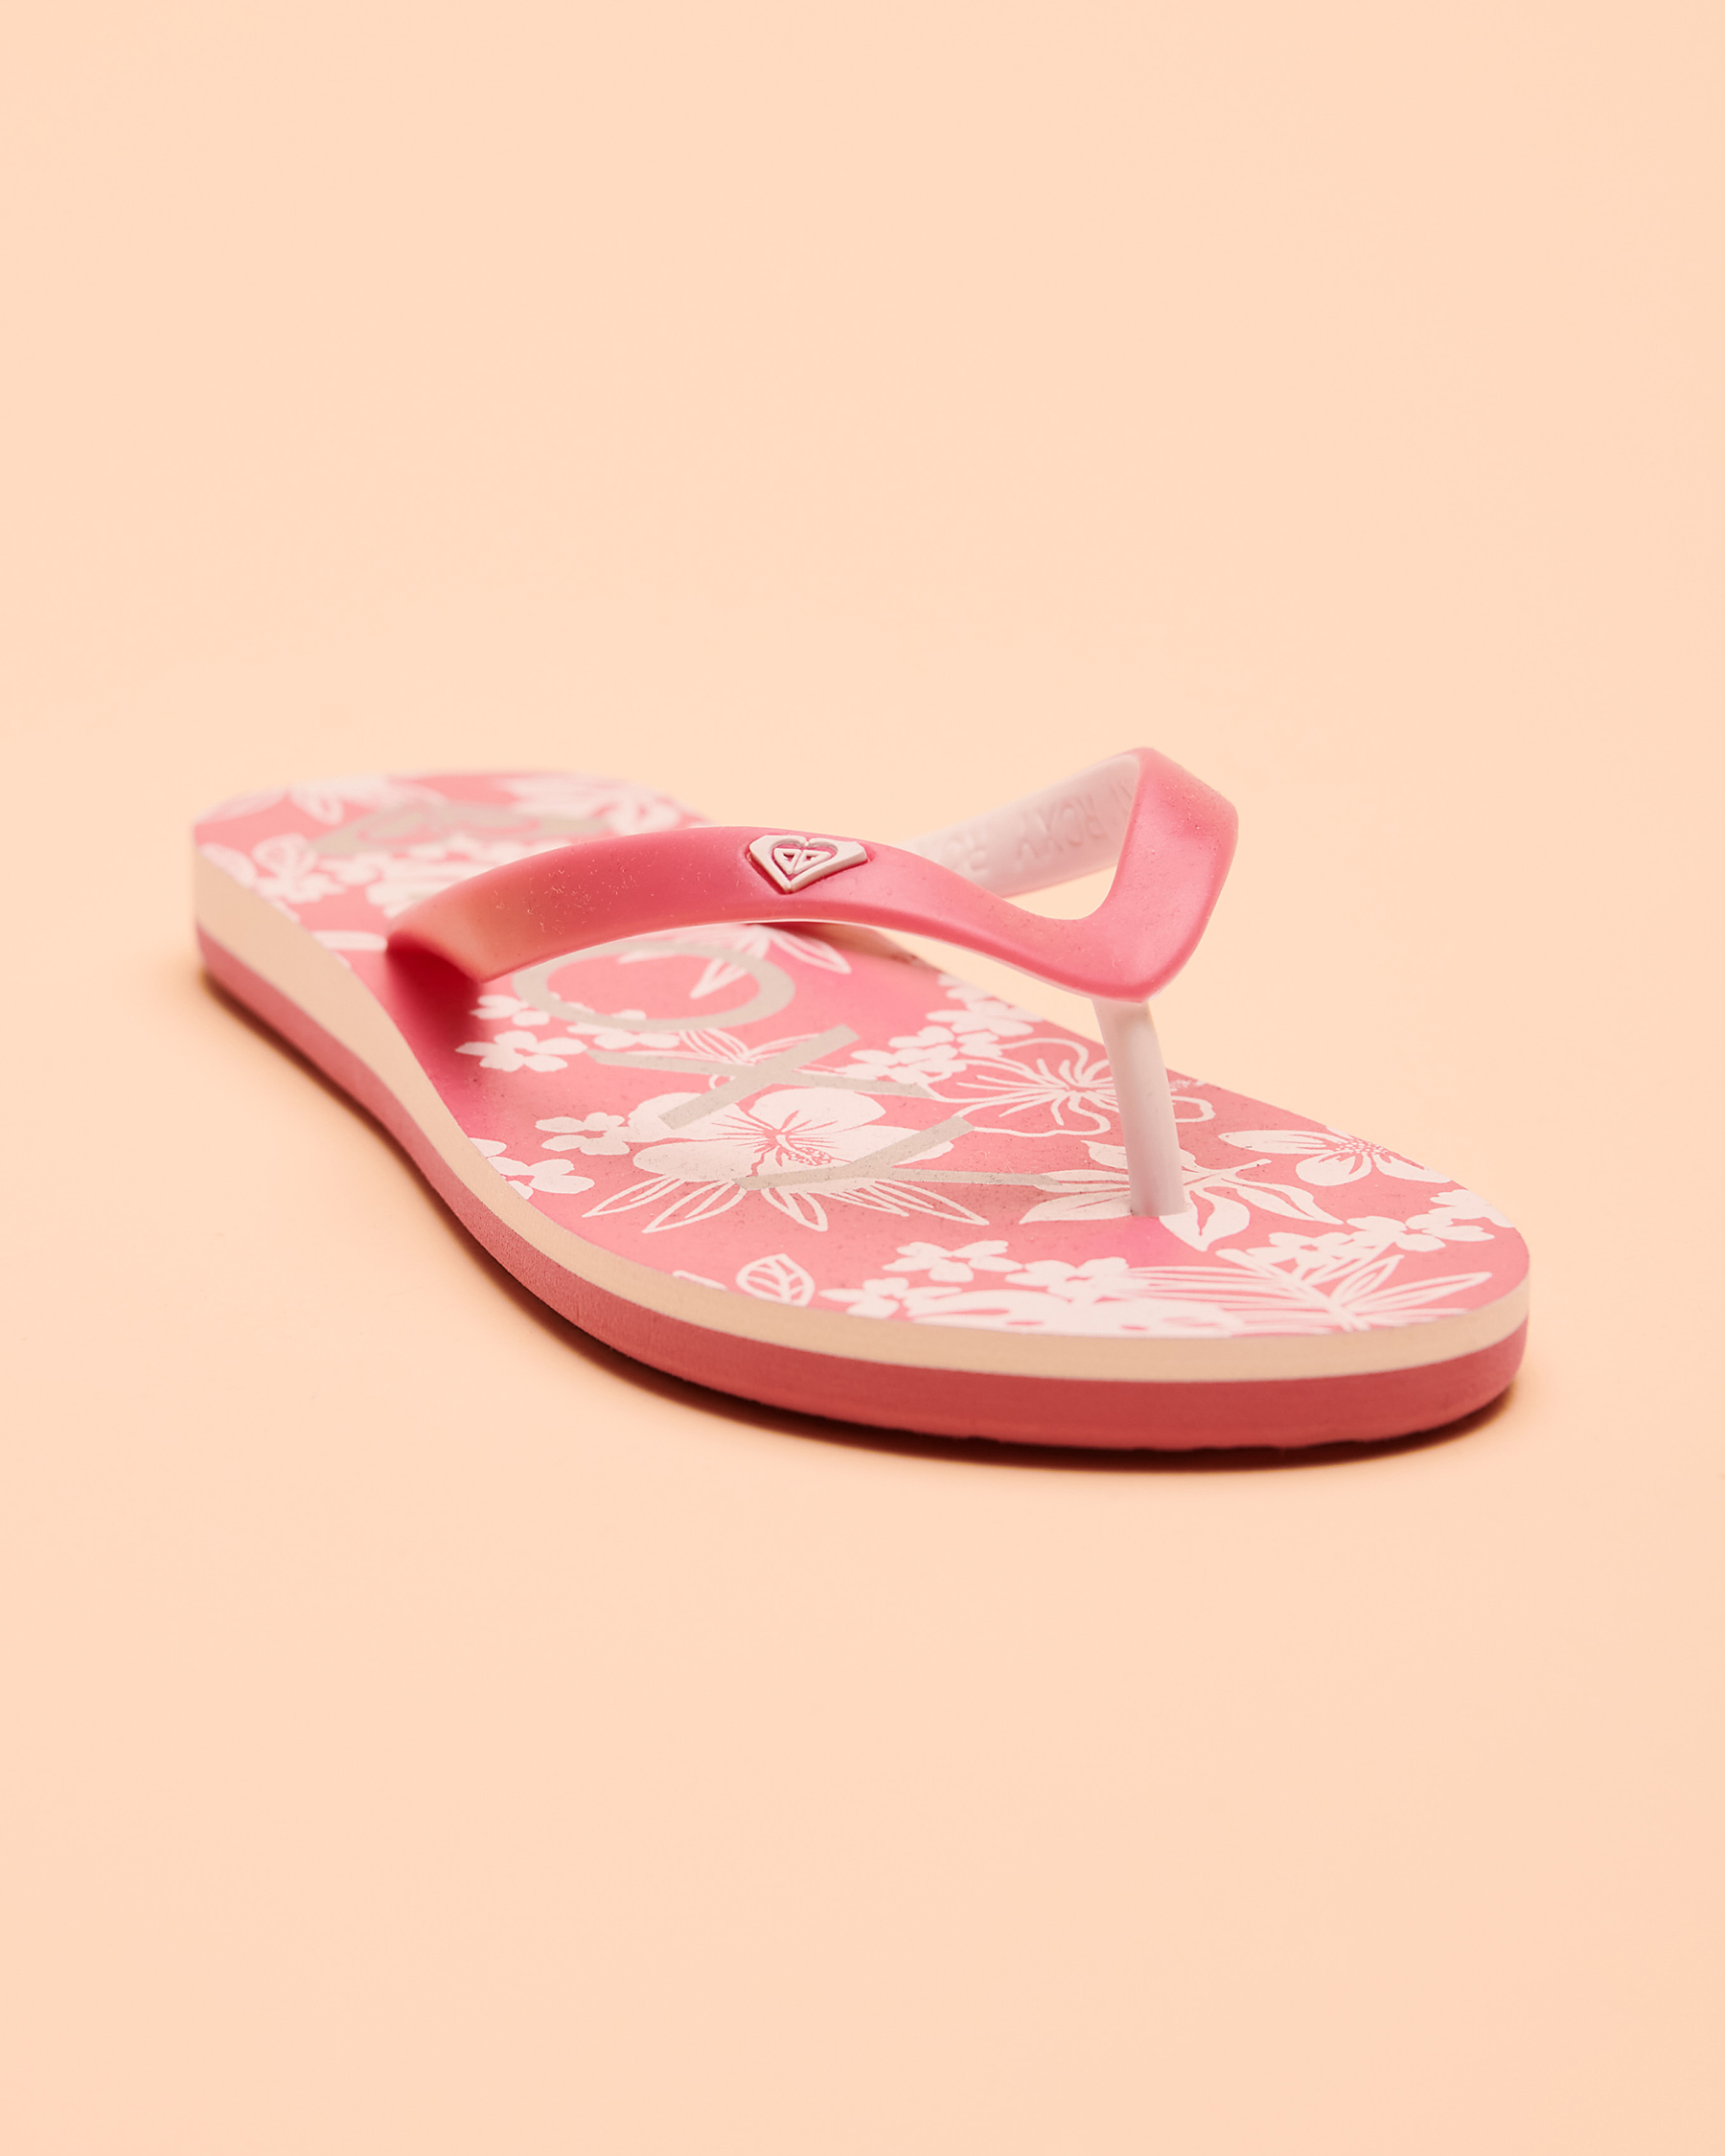 ROXY Tahiti Sandal Pink/White ARJL100869 - View4